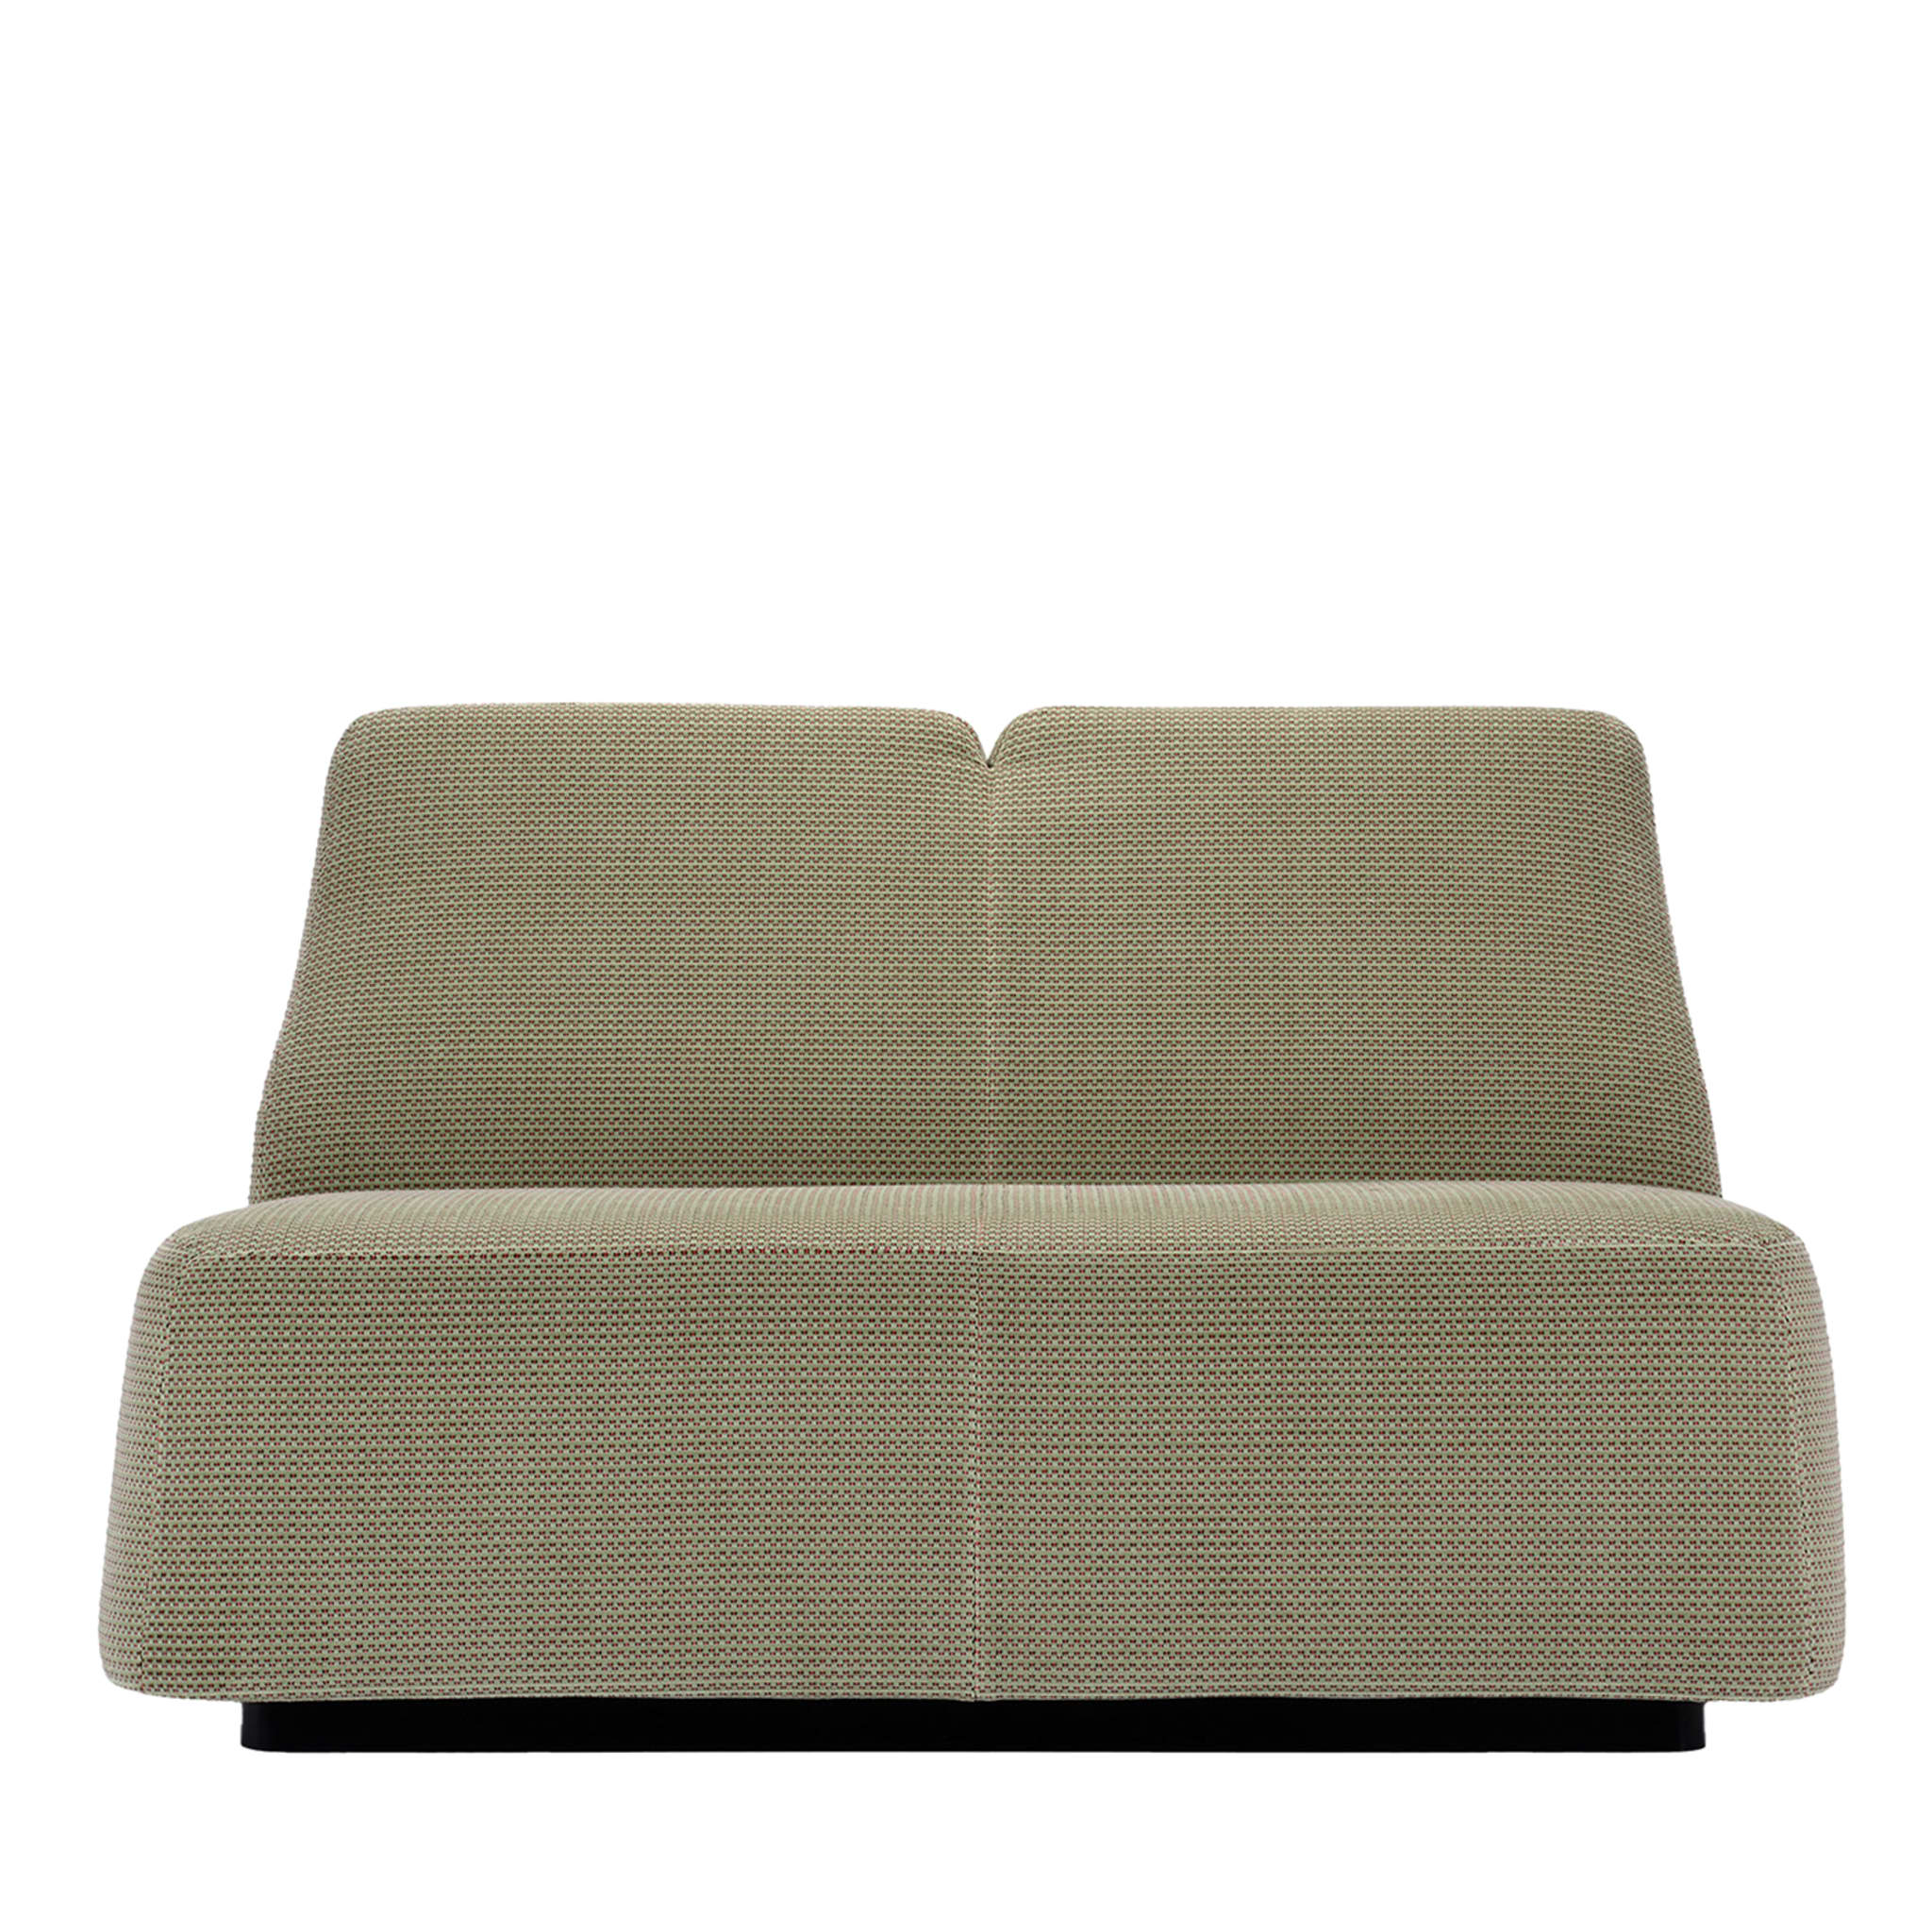 Nuda 2-Seater Gray Sofa by Simone Micheli - Main view